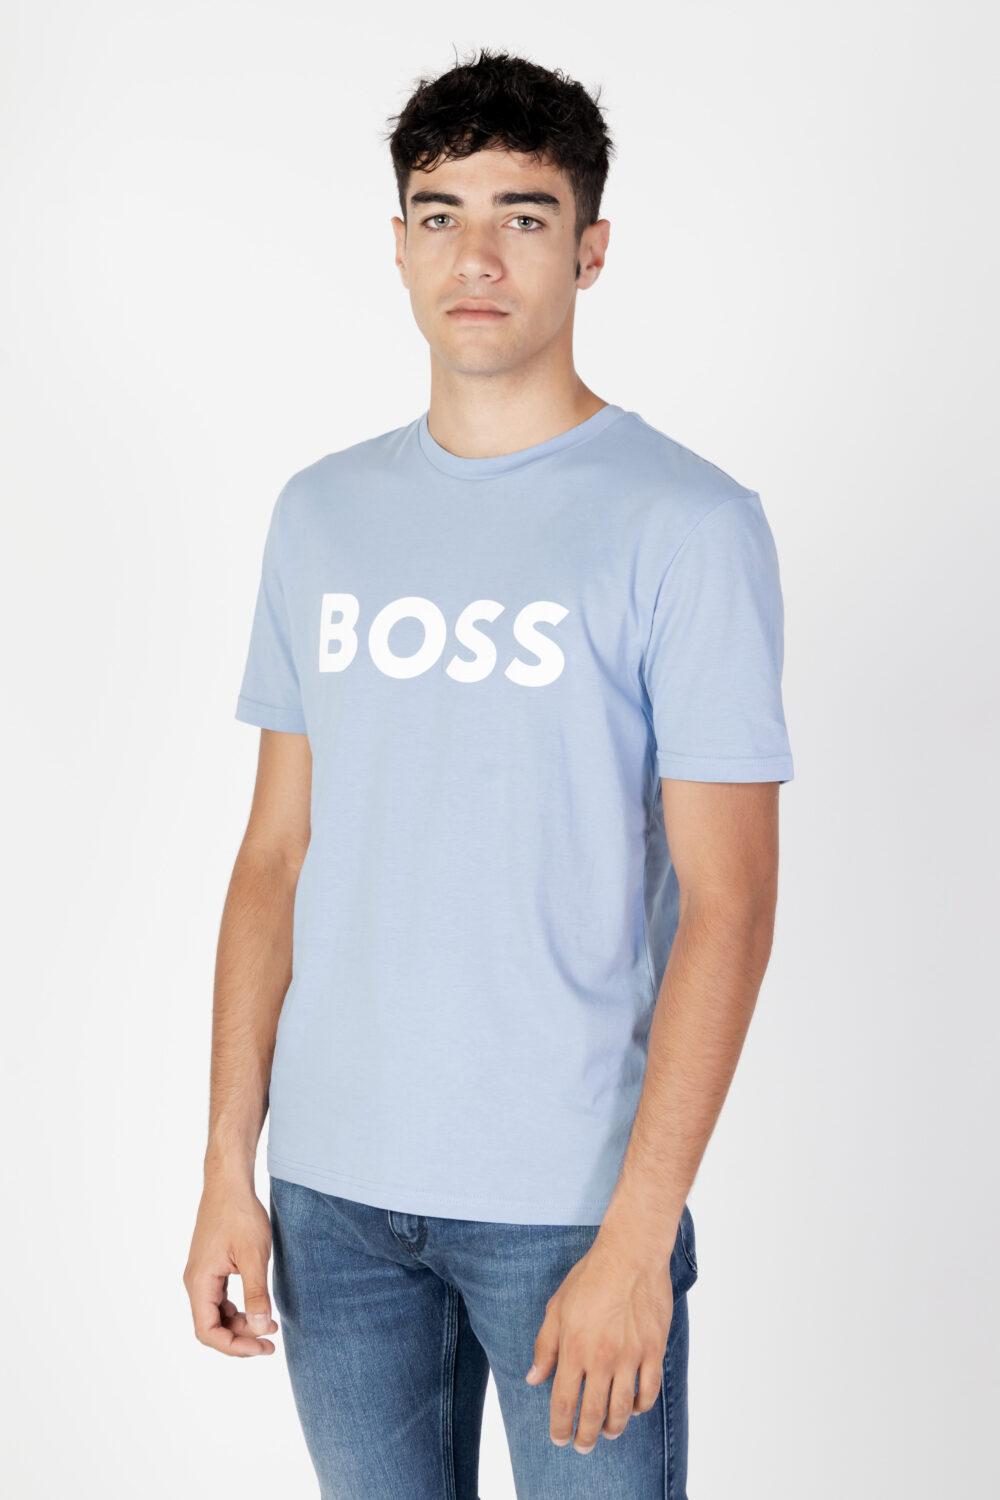 T-shirt Boss thinking 1 Celeste - Foto 1